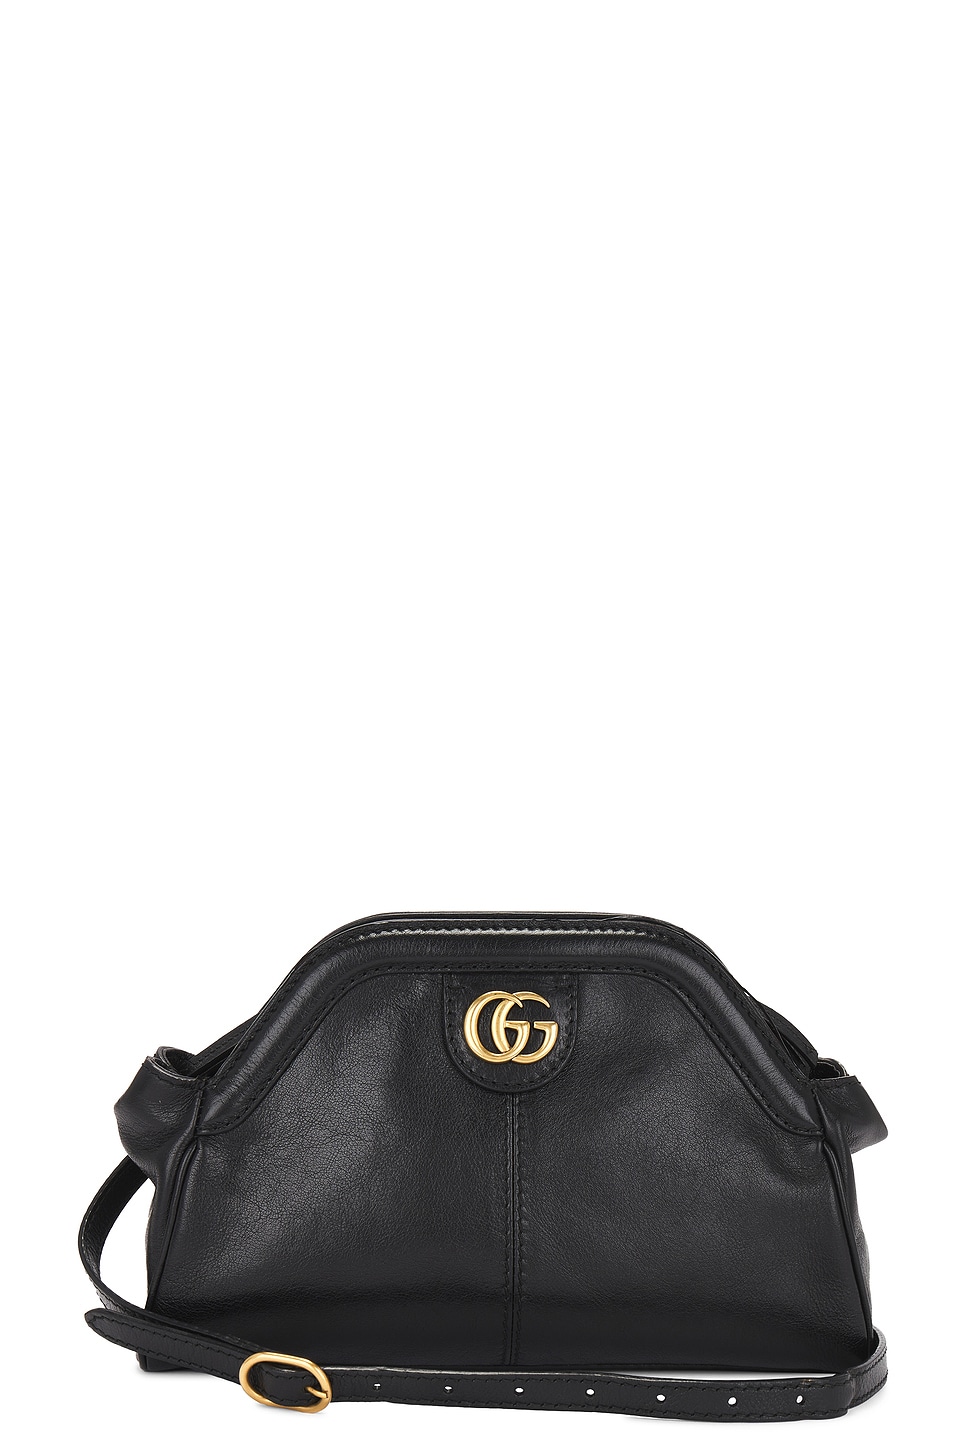 Gucci Gg Marmont Shoulder Bag In Blue